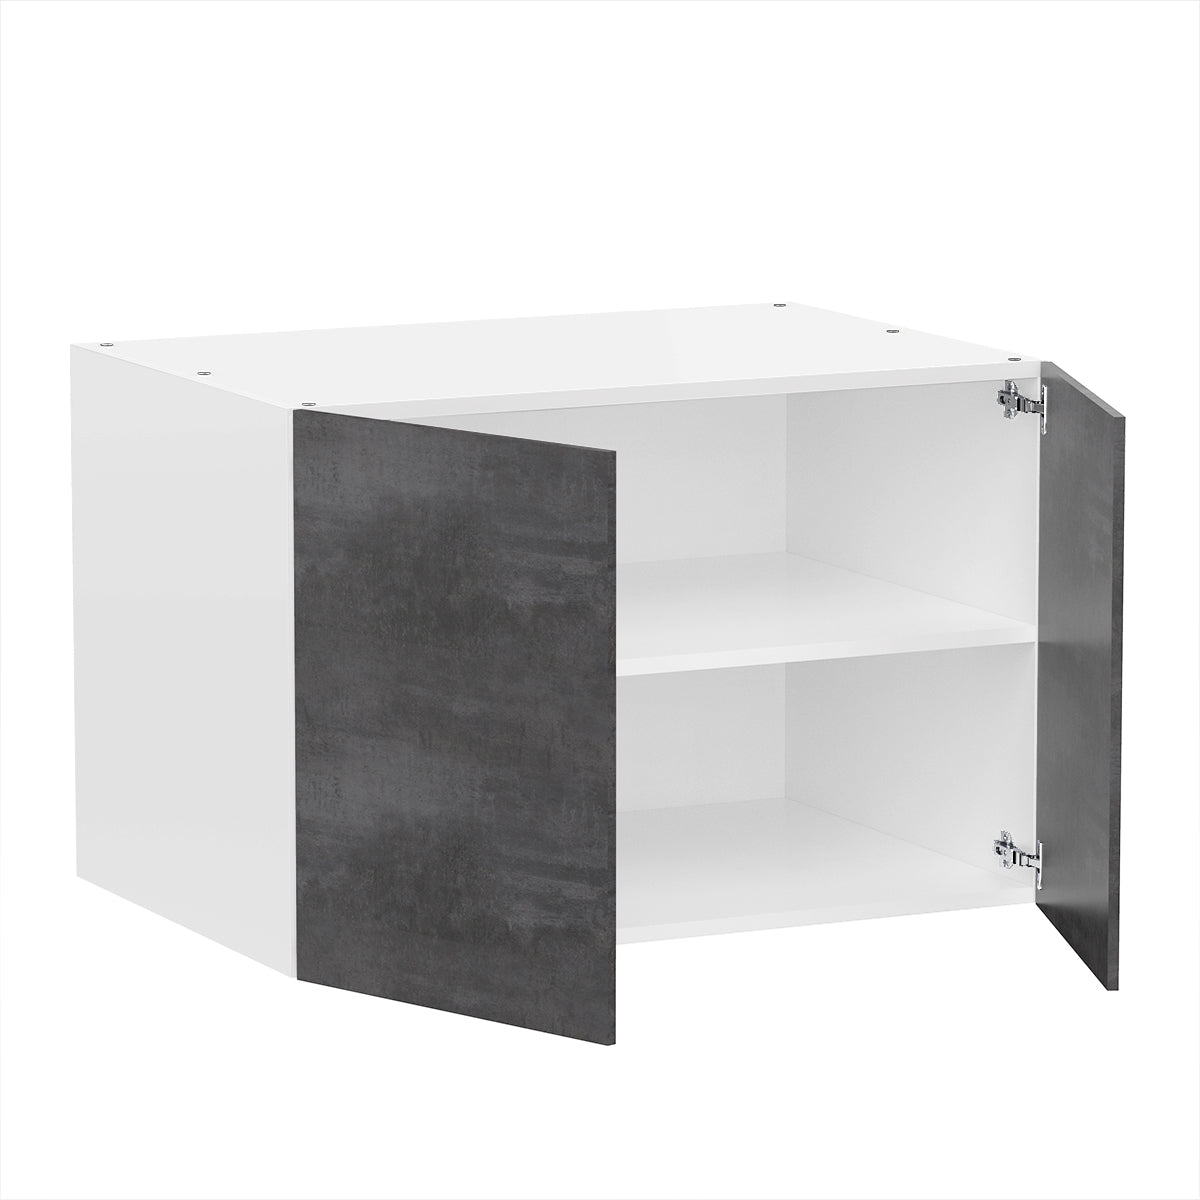 RTA - Rustic Grey - Double Door Refrigerator Wall Cabinets | 36"W x 24"H x 24"D